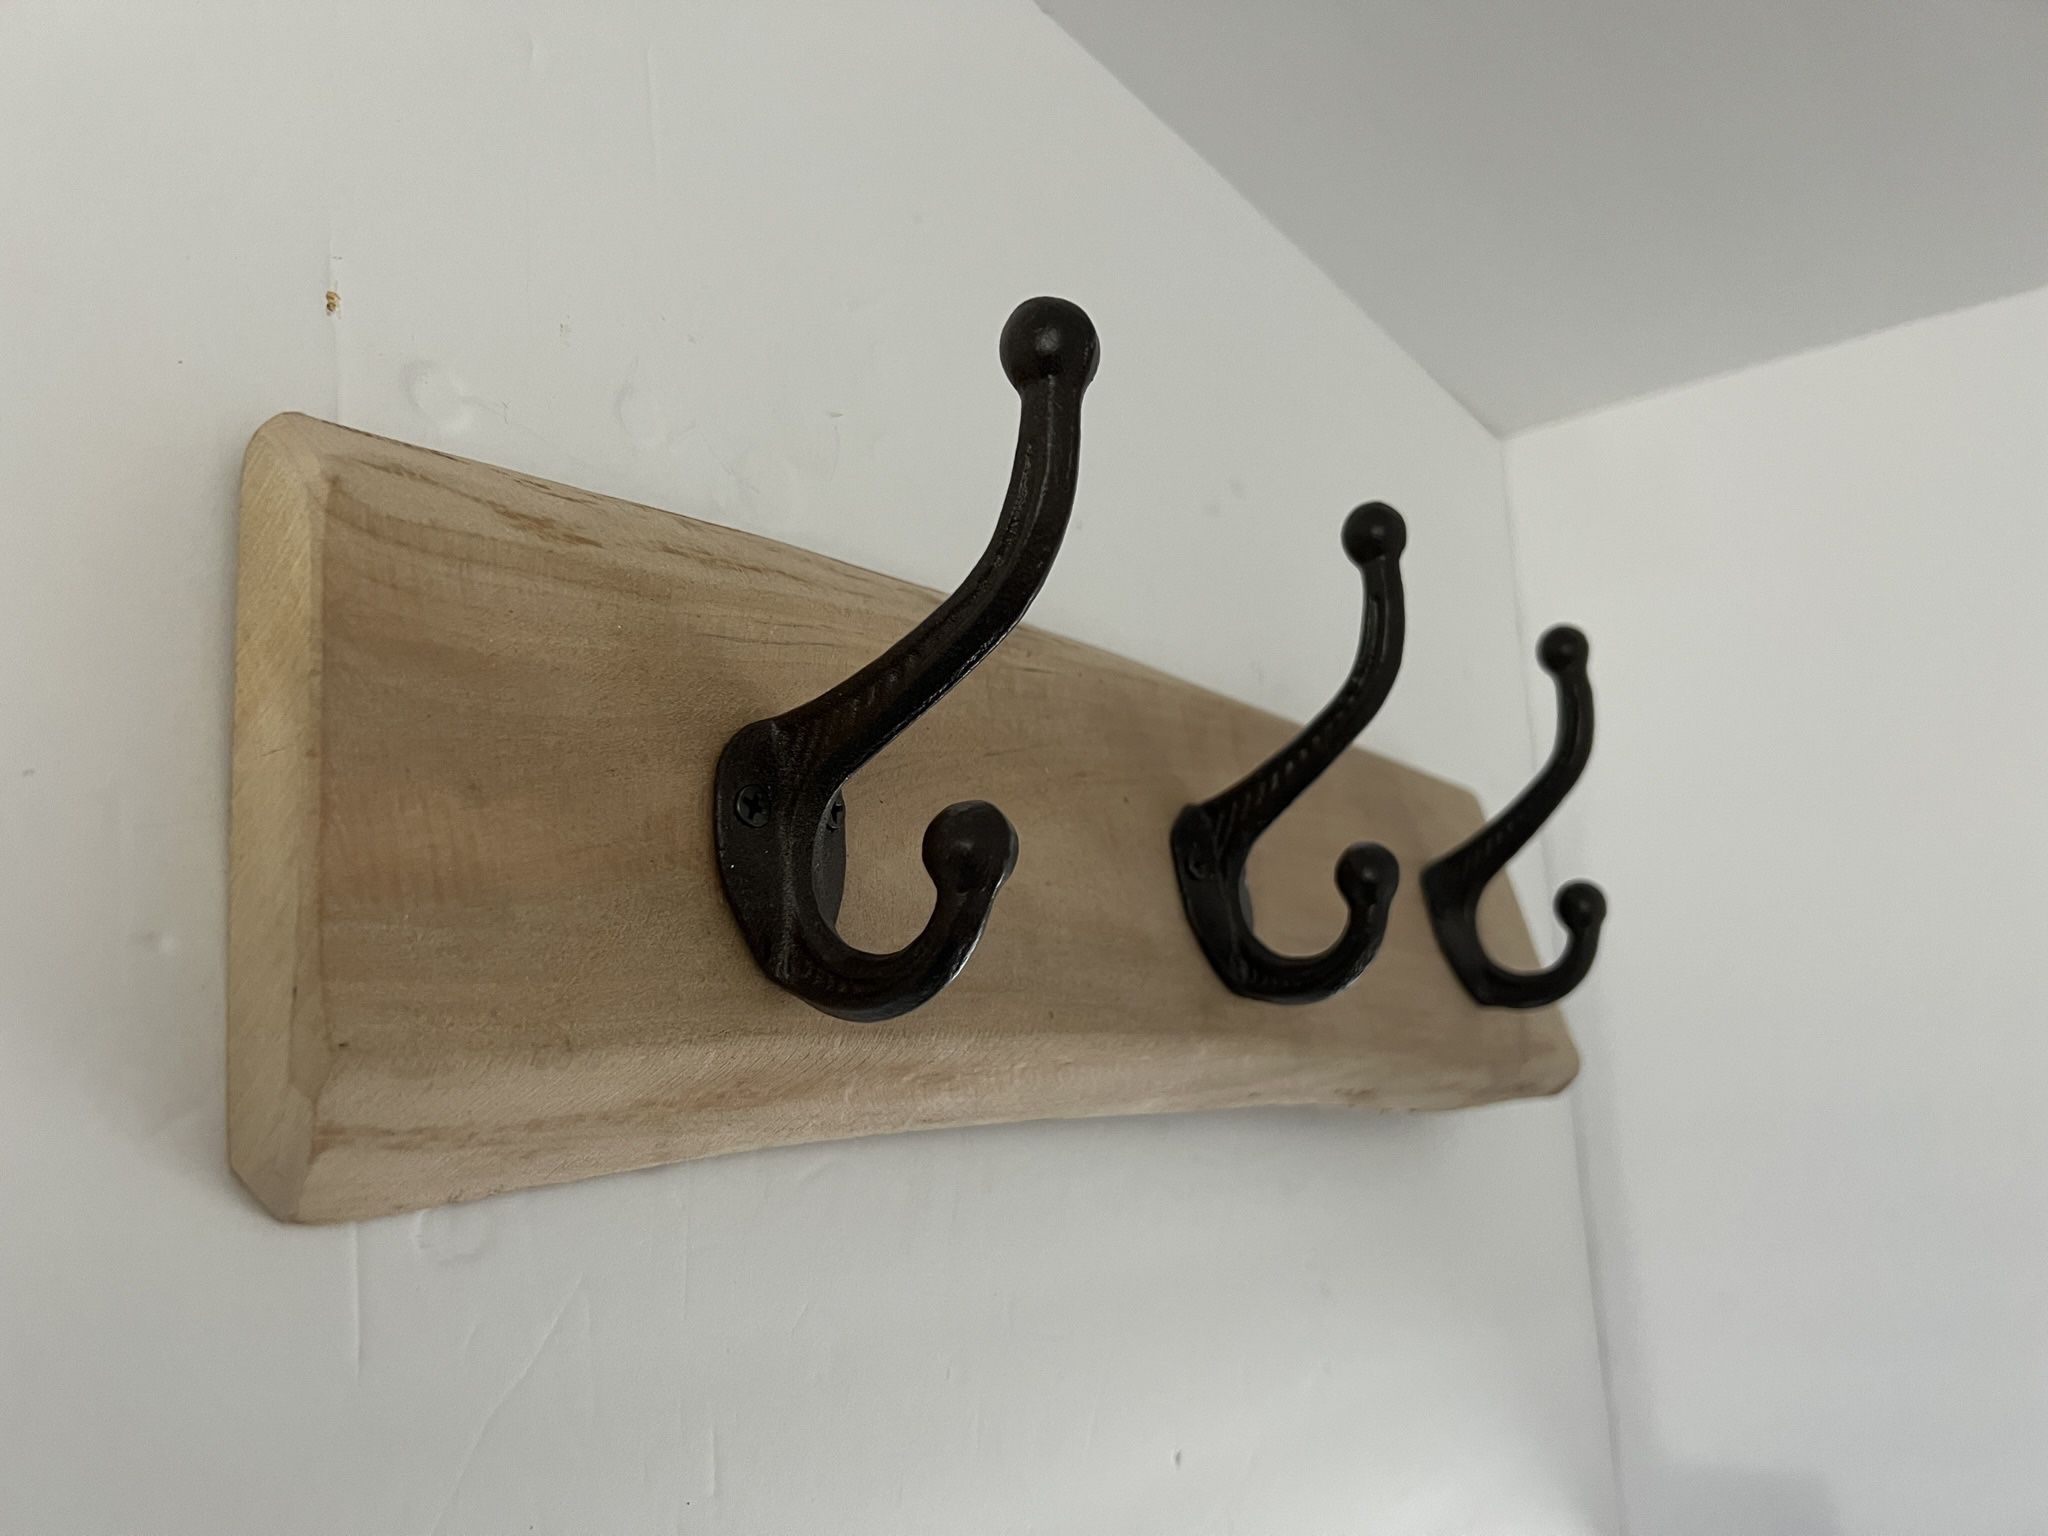 Wall Mount Key Rack Hanger Holder 3 Hook Chain Storage Keys Organizer Home Decor - Organizador de Llaves